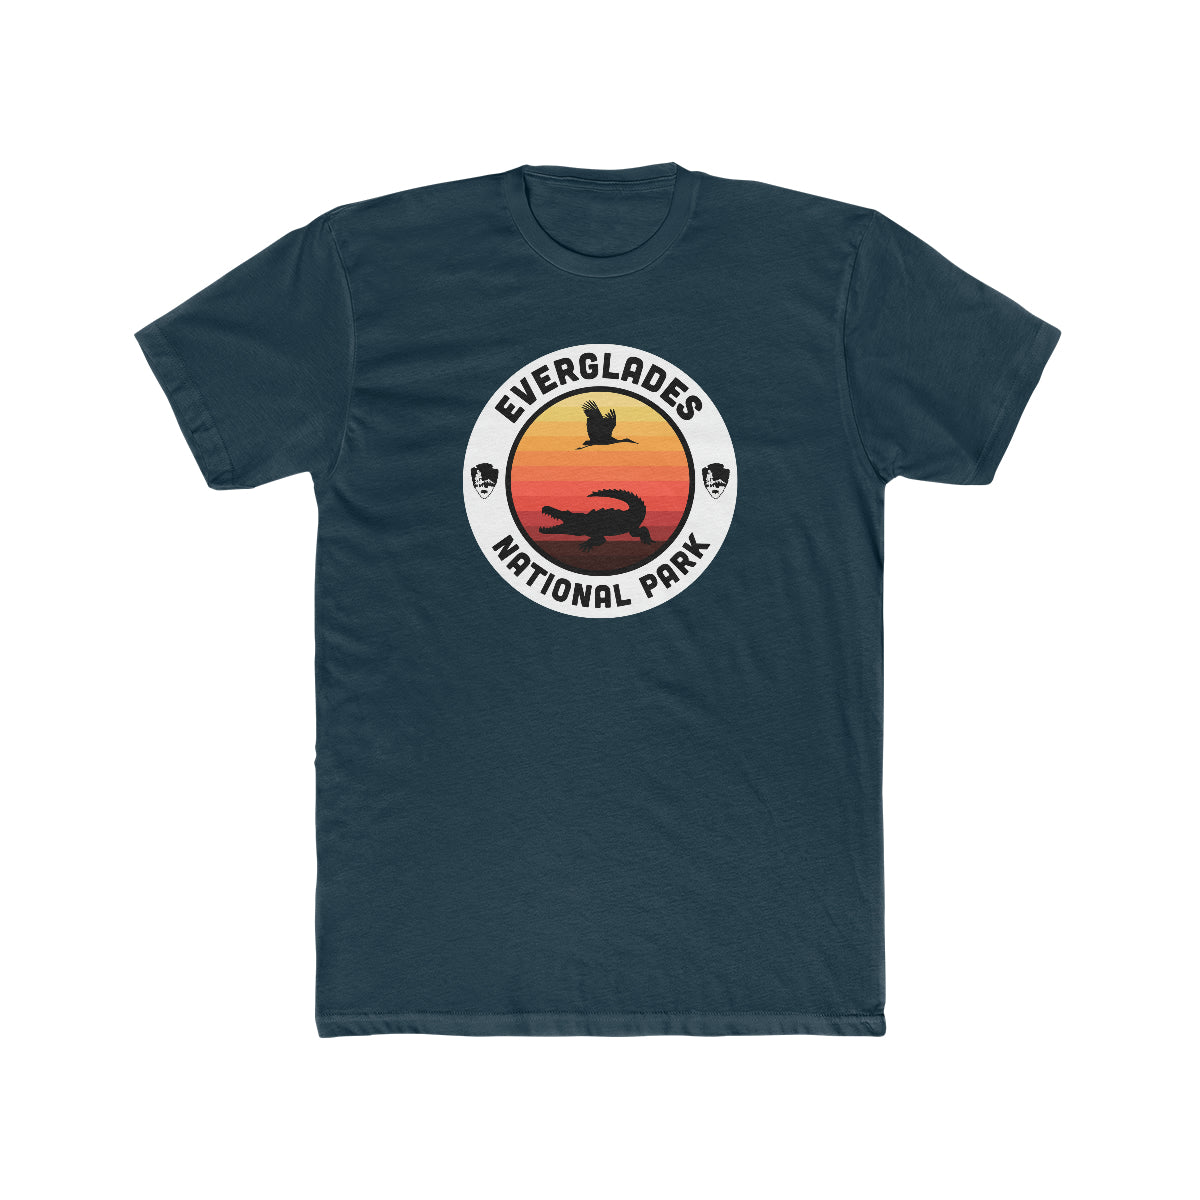 Everglades National Park T-Shirt - Round Badge Design